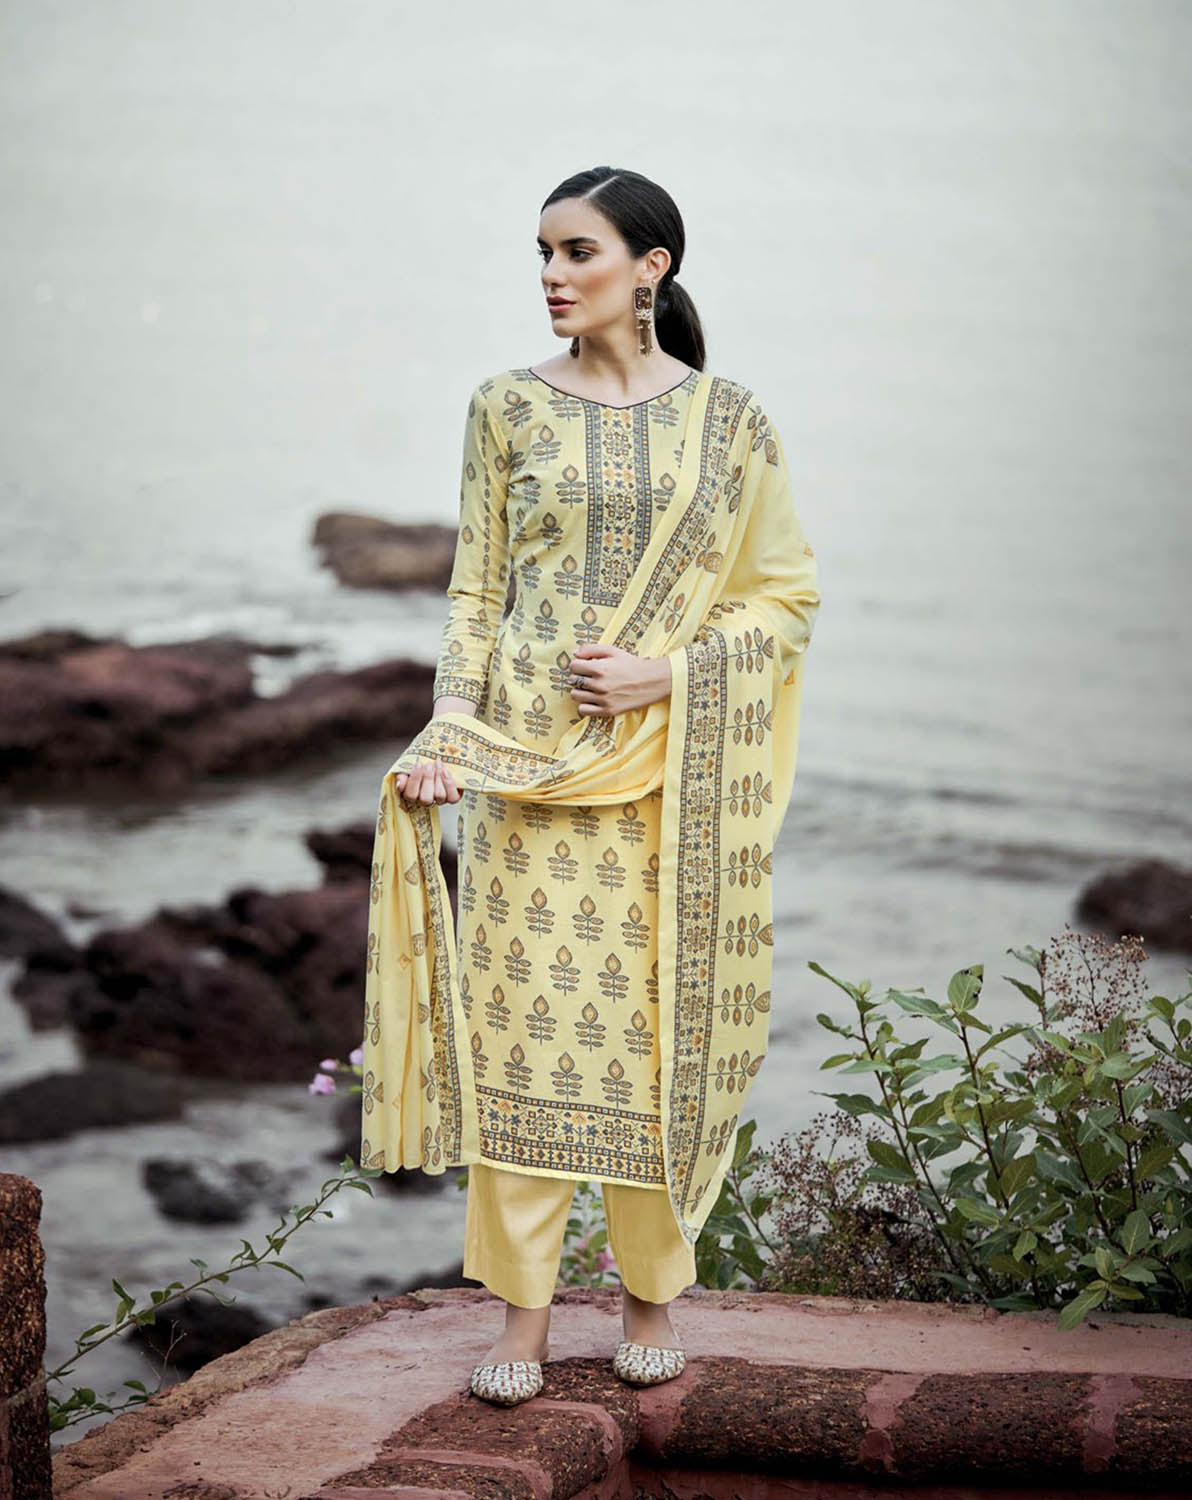 Sargam Unstitched Yellow Cotton Suits Dress Materials for Women